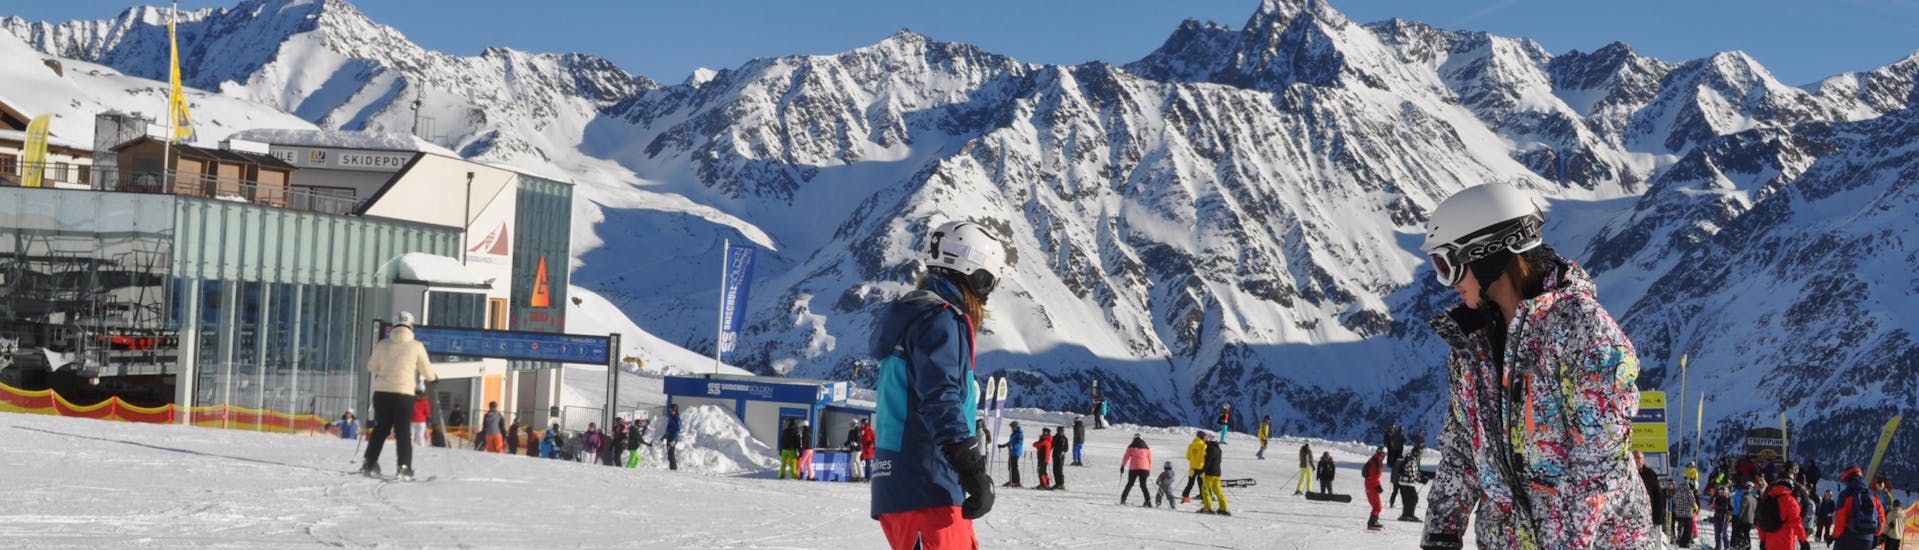 Cours particulier de snowboard avec Skischule SNOWLINES Sölden - Hero image